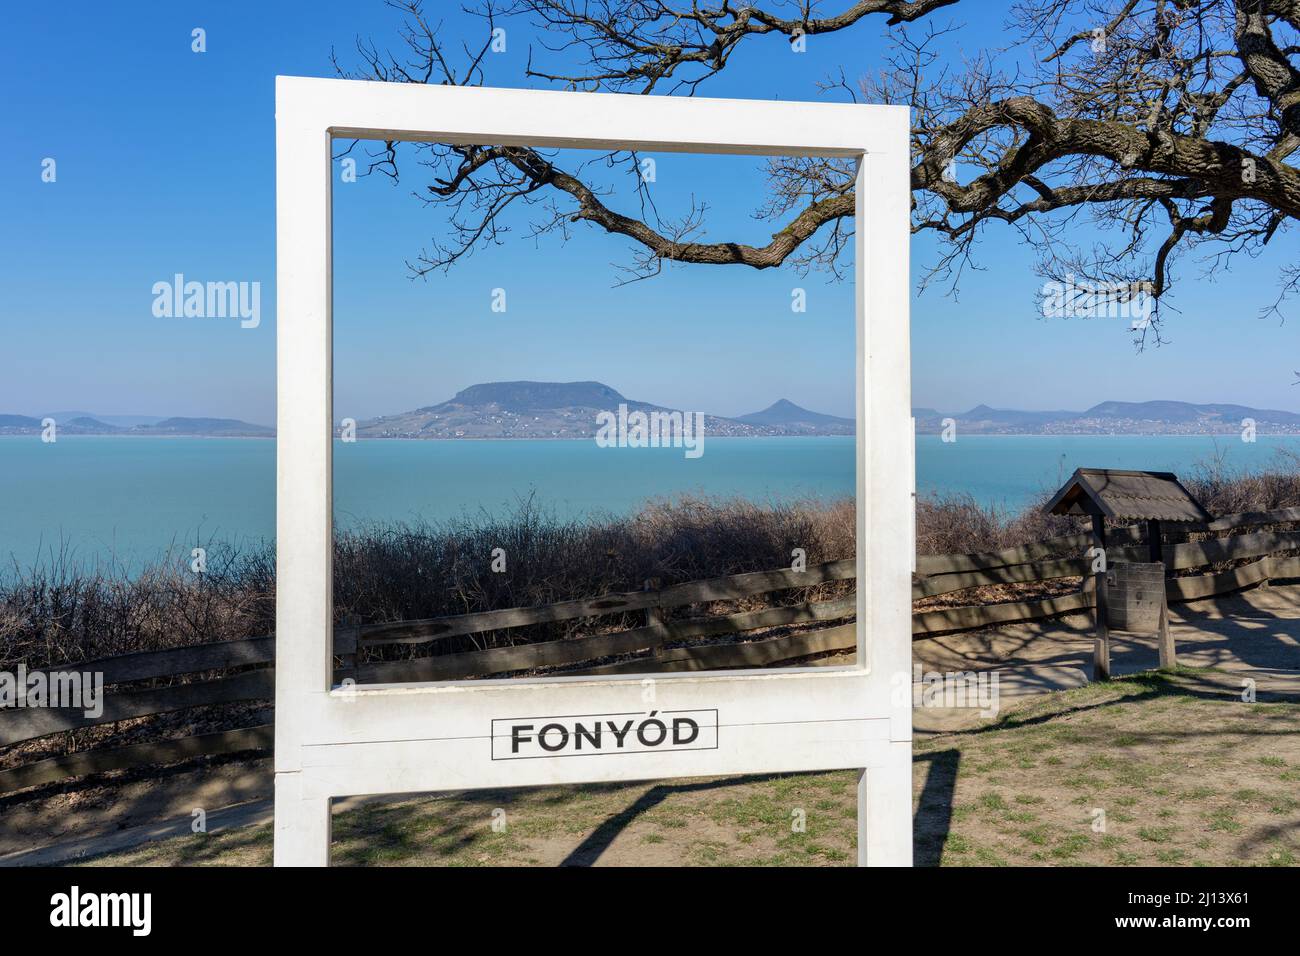 https://c8.alamy.com/comp/2J13X61/beautiful-szaplonczay-promenade-with-lake-balaton-landscape-in-fonyd-hungary-with-badacsony-hill-in-white-photo-frame-with-fonyod-sign-2J13X61.jpg